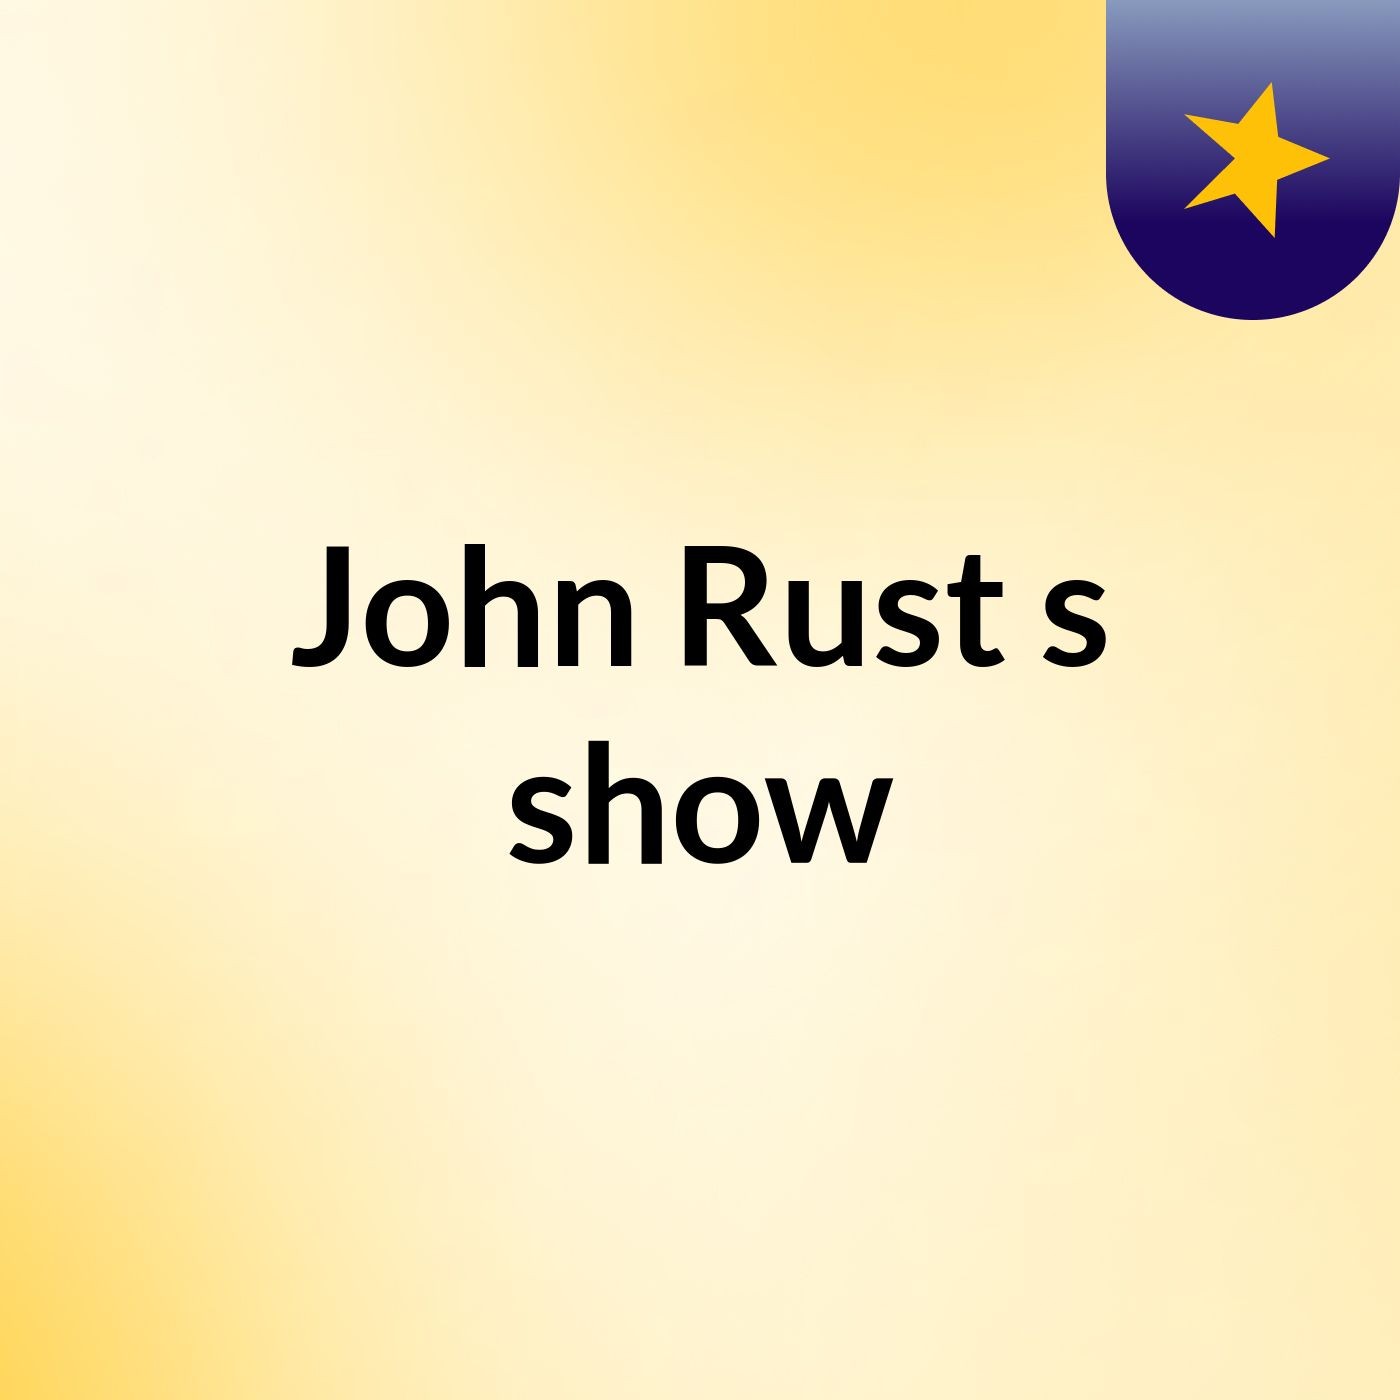 John Rust's show